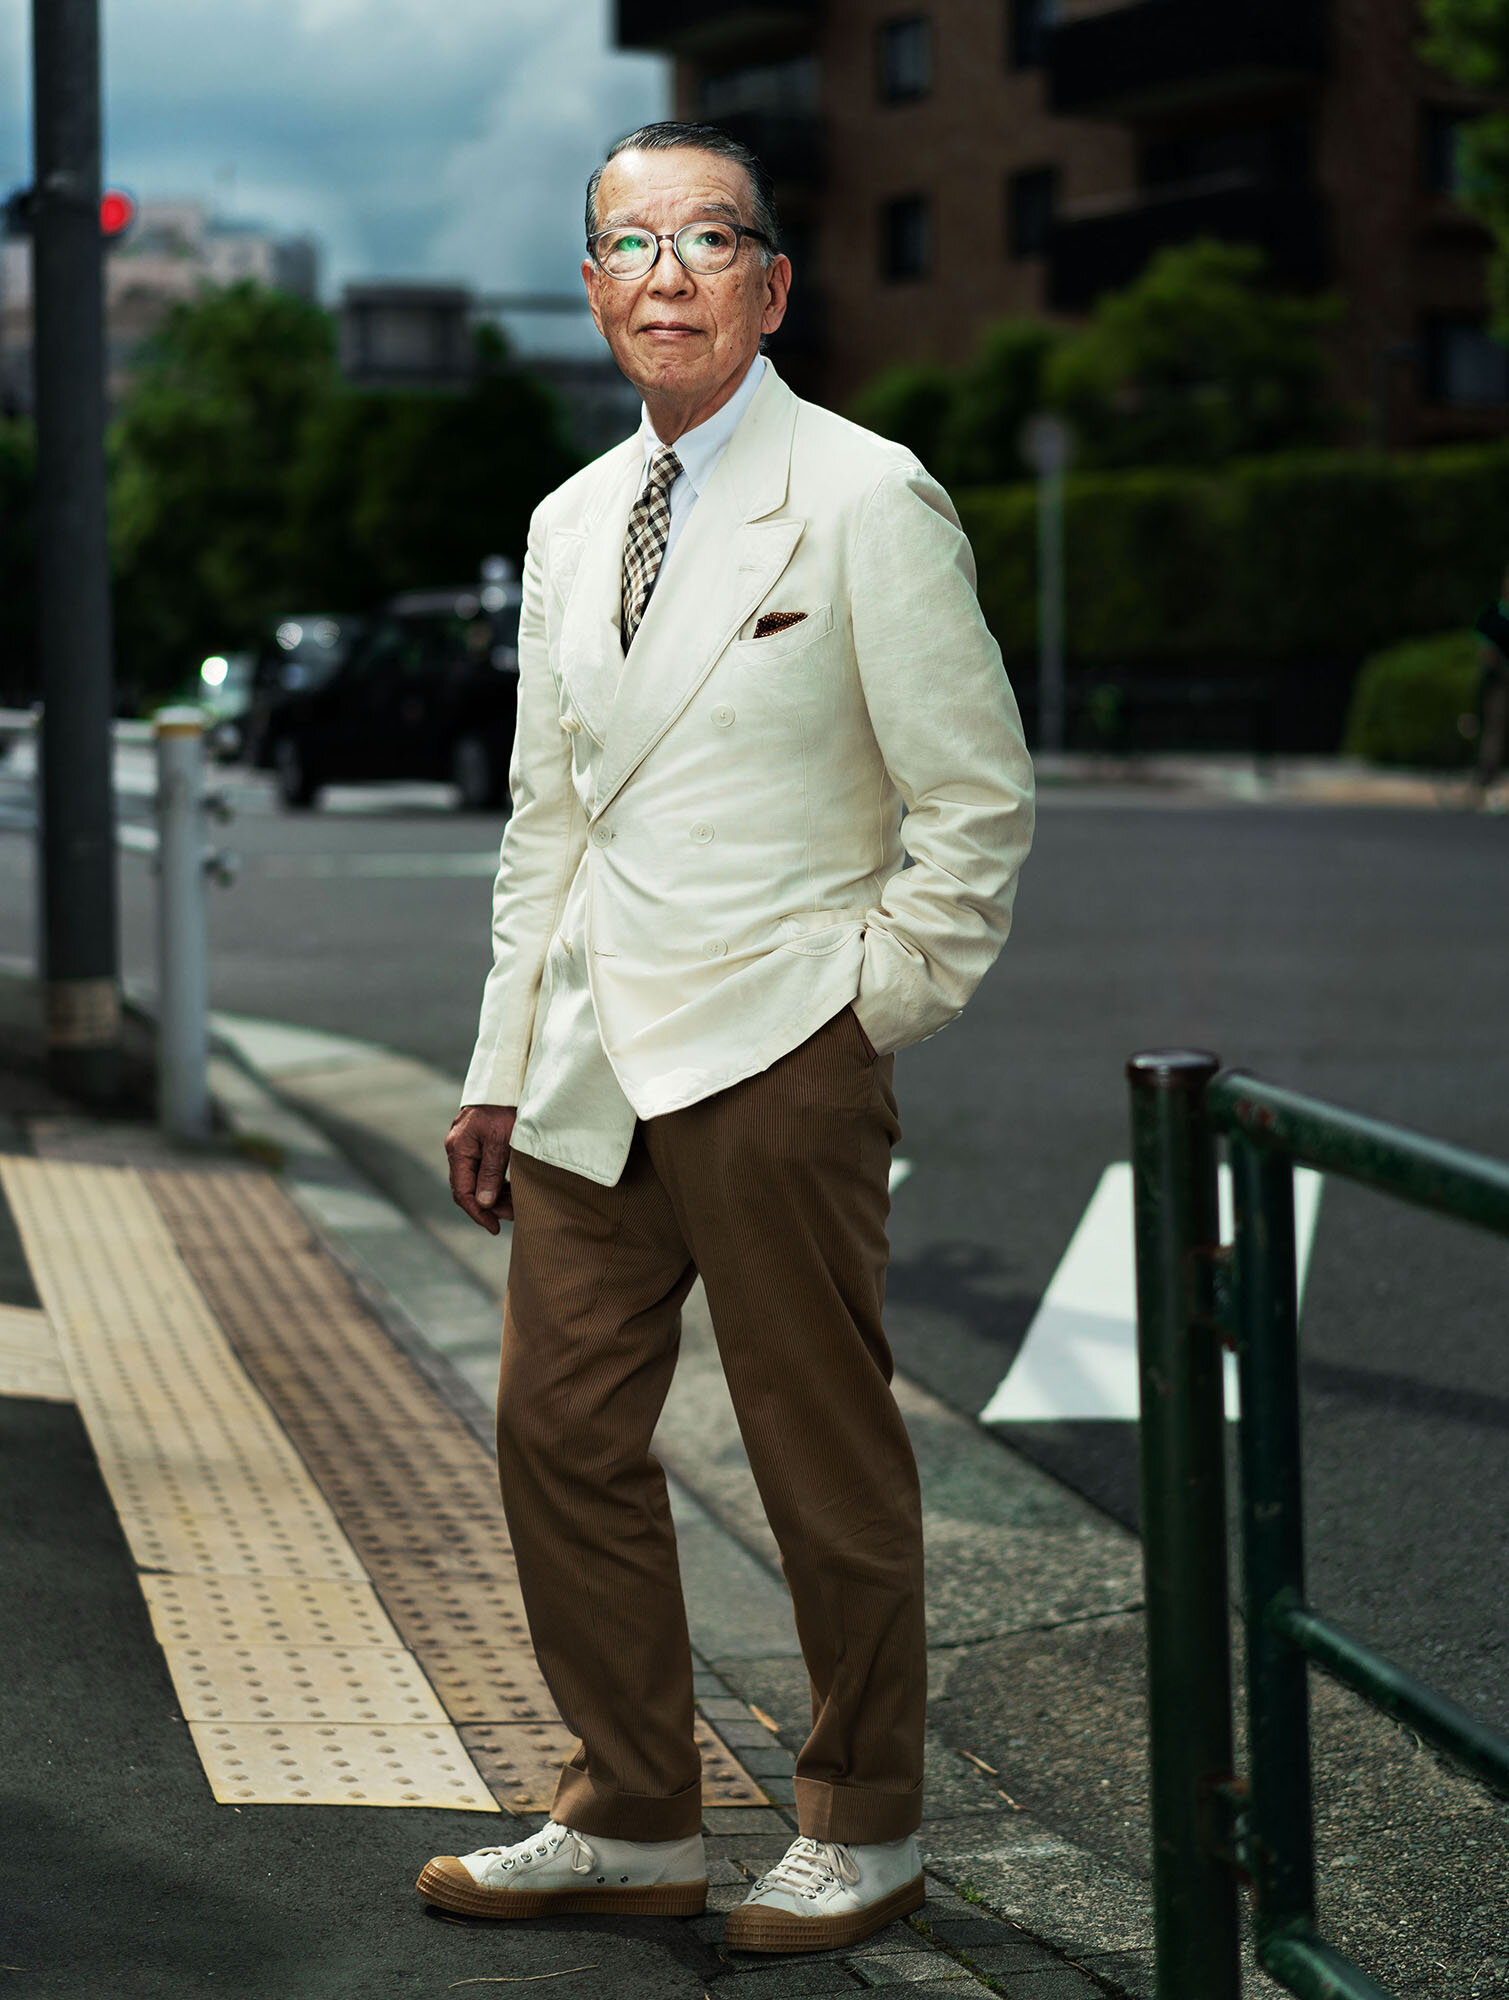 Andrew-Goldie-Photographer-Portraiture-Editorial-Japan-935.jpg